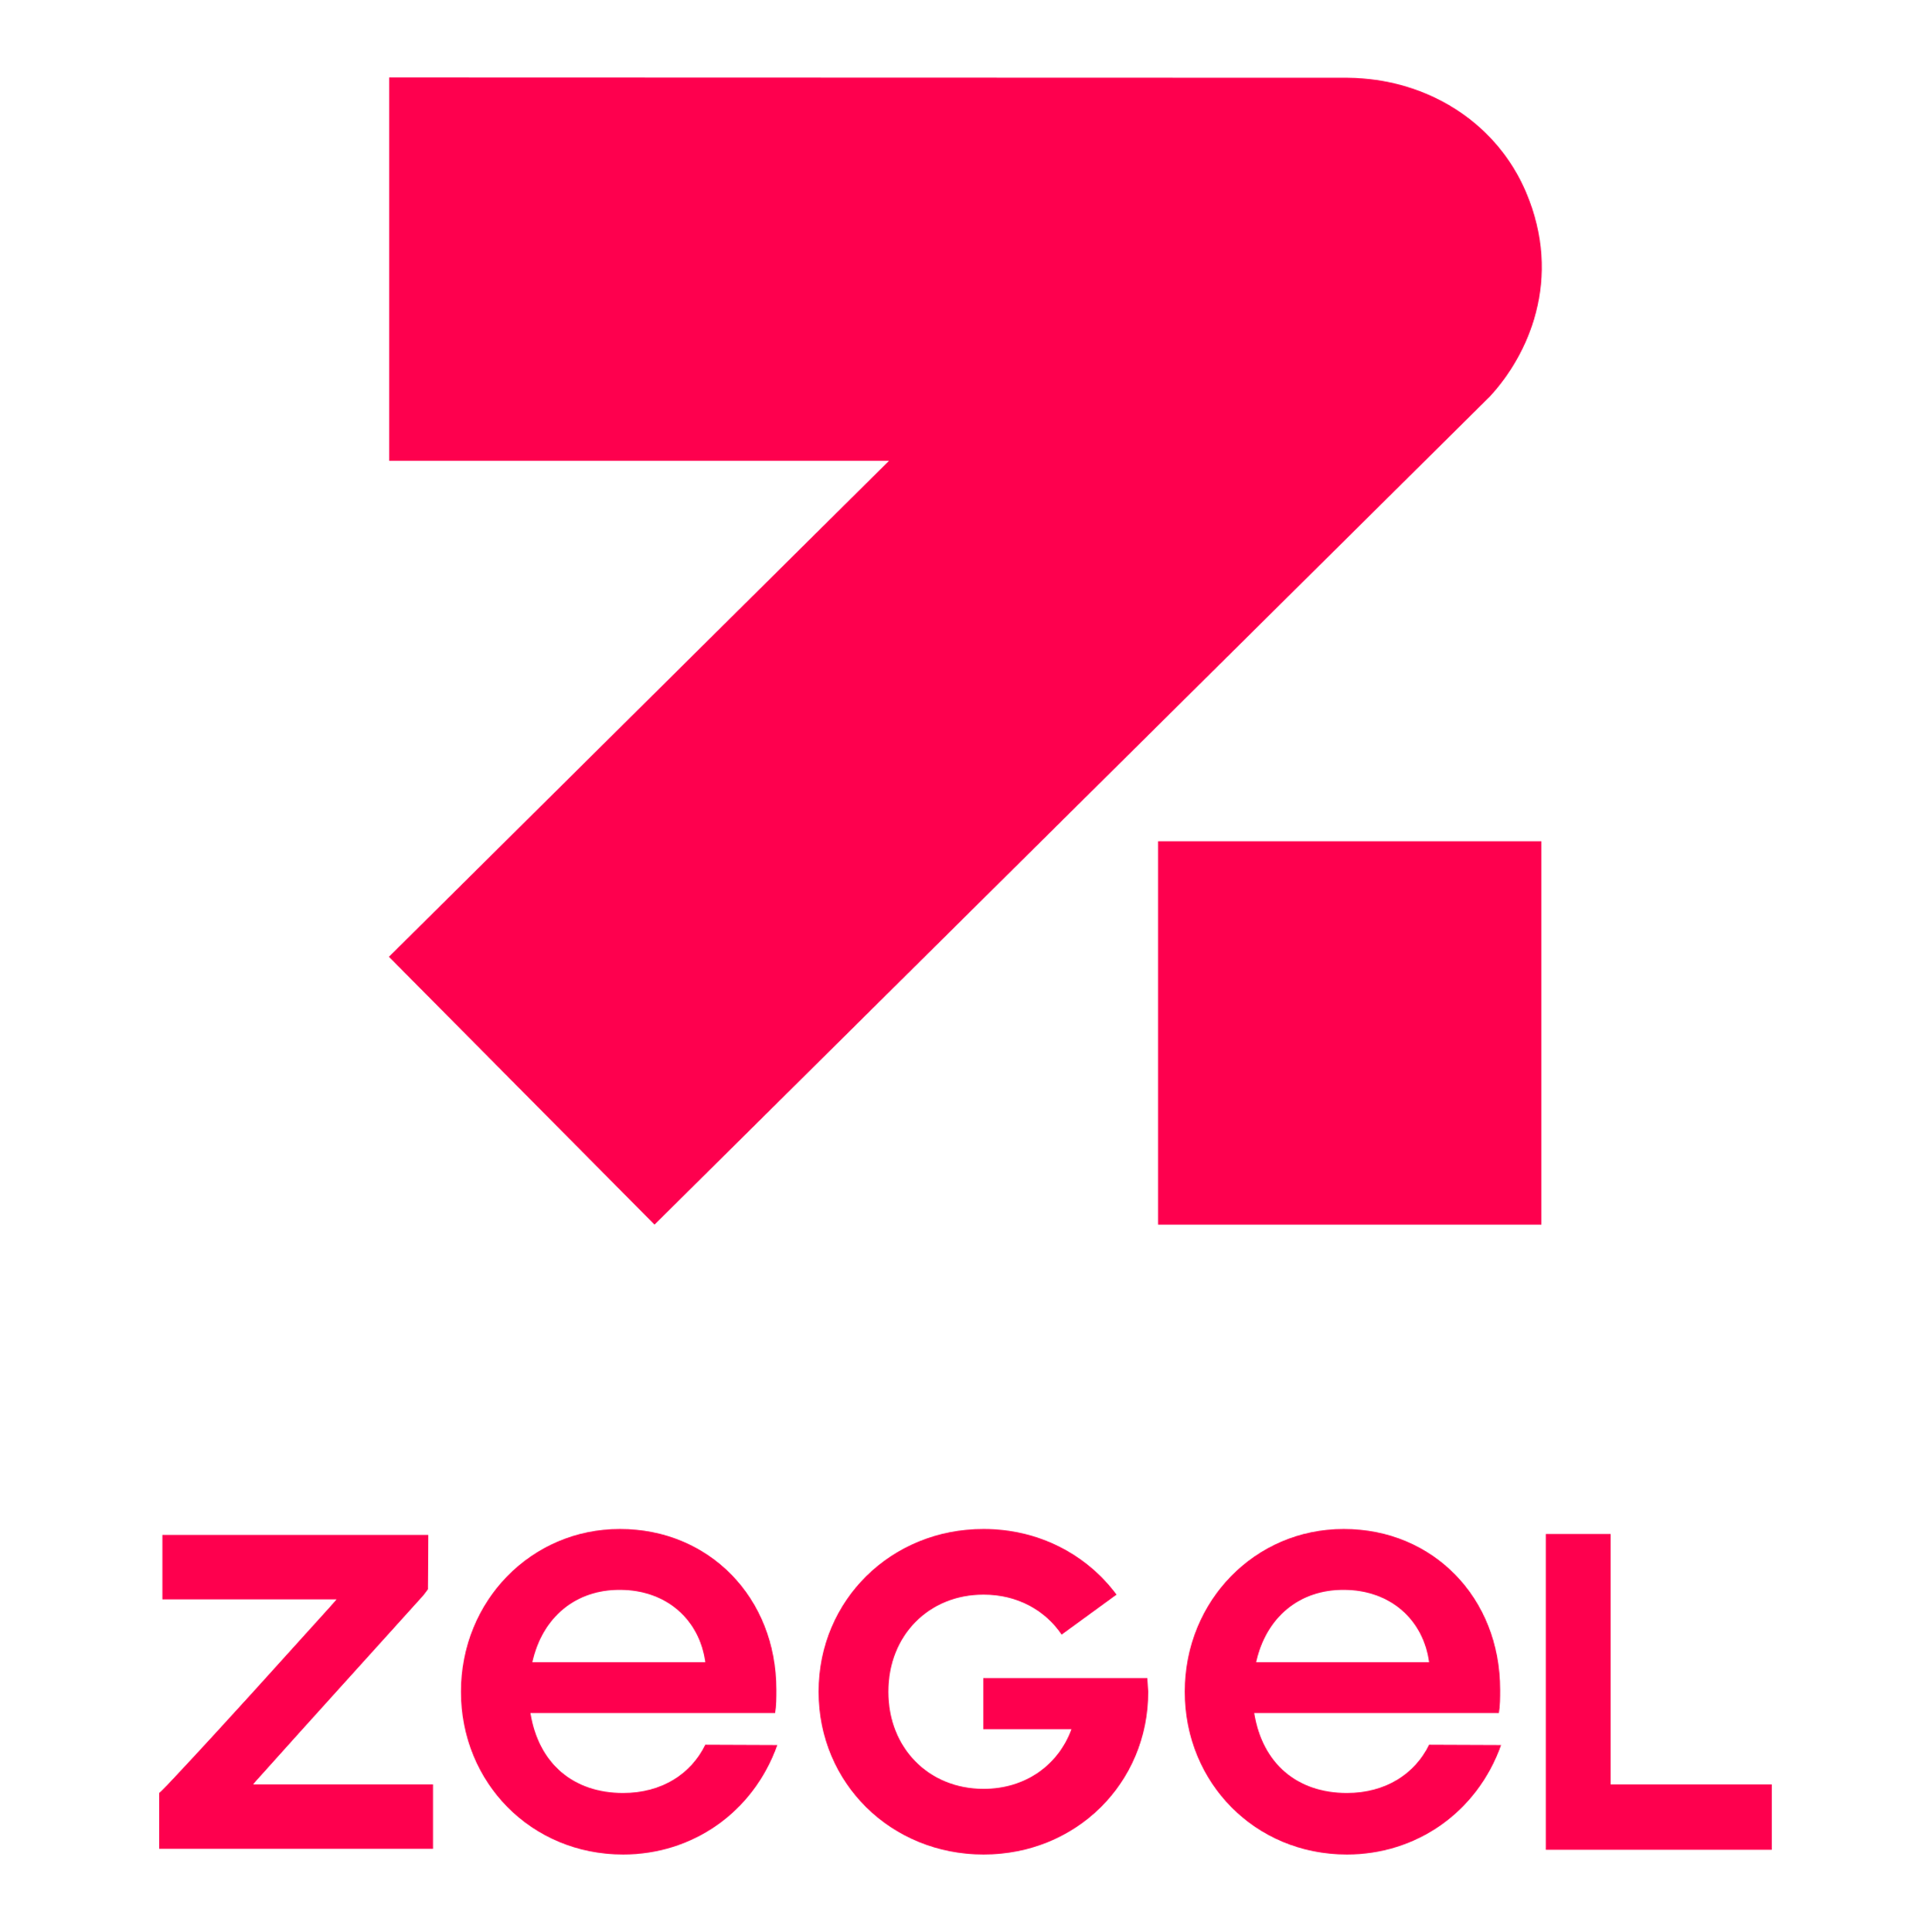 Zegel 2023 Logo  Transparent Image